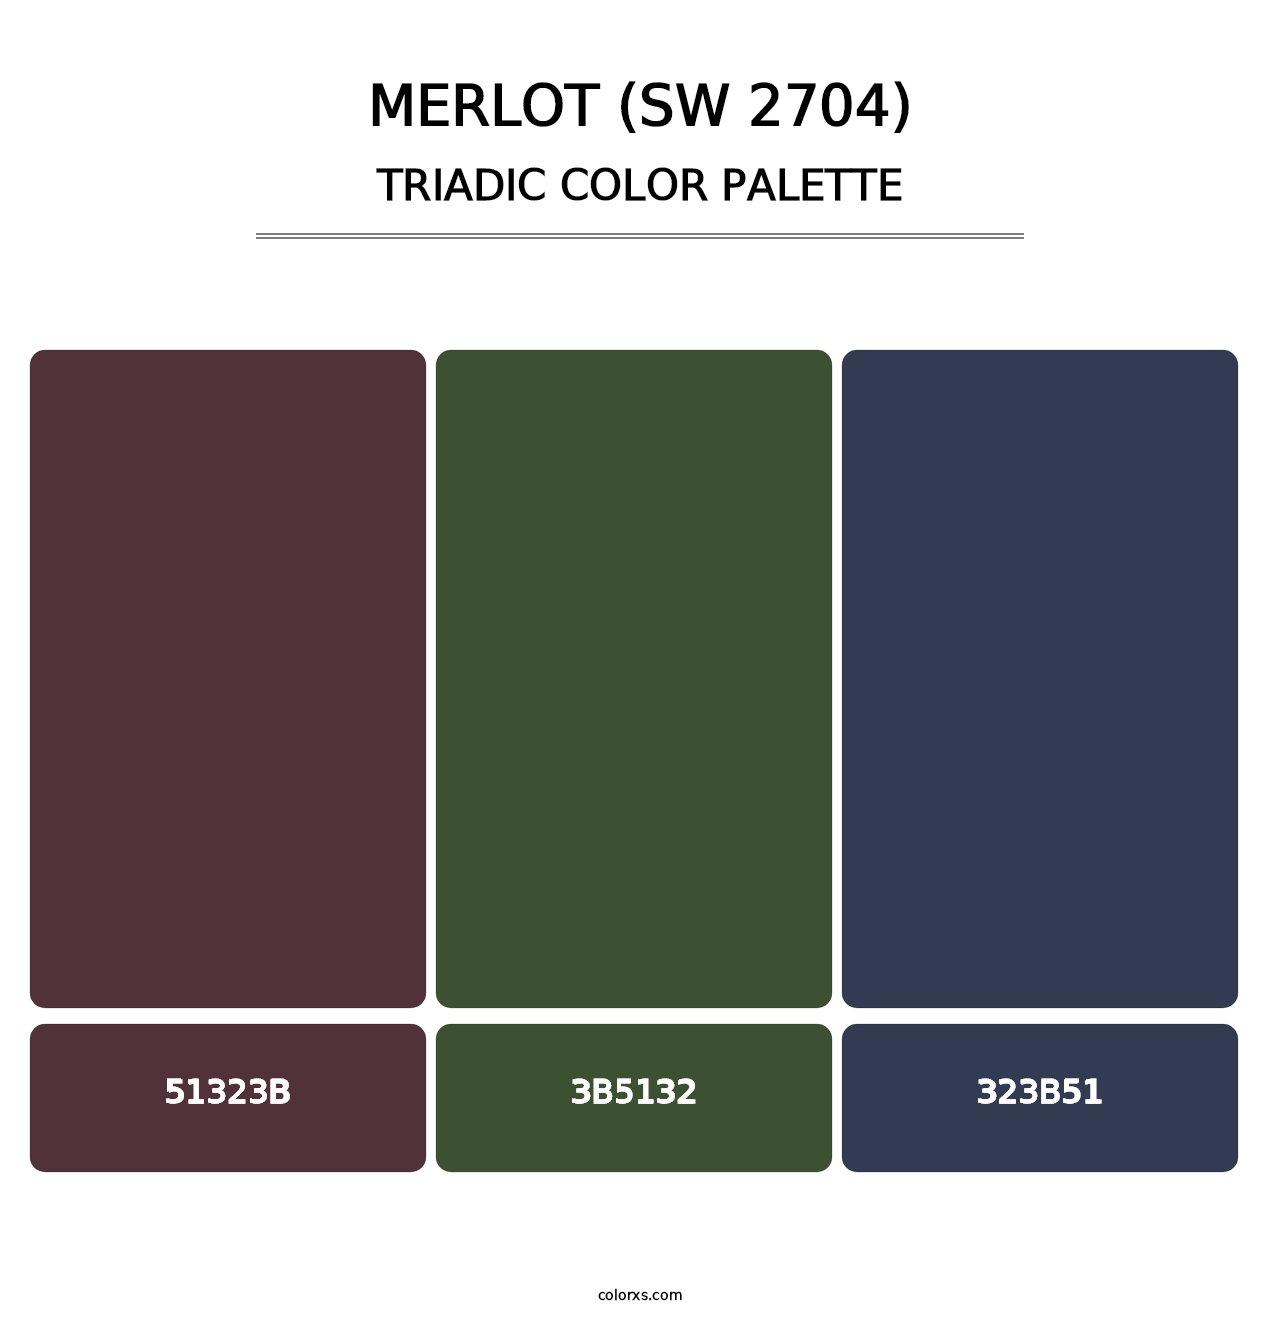 Merlot (SW 2704) - Triadic Color Palette